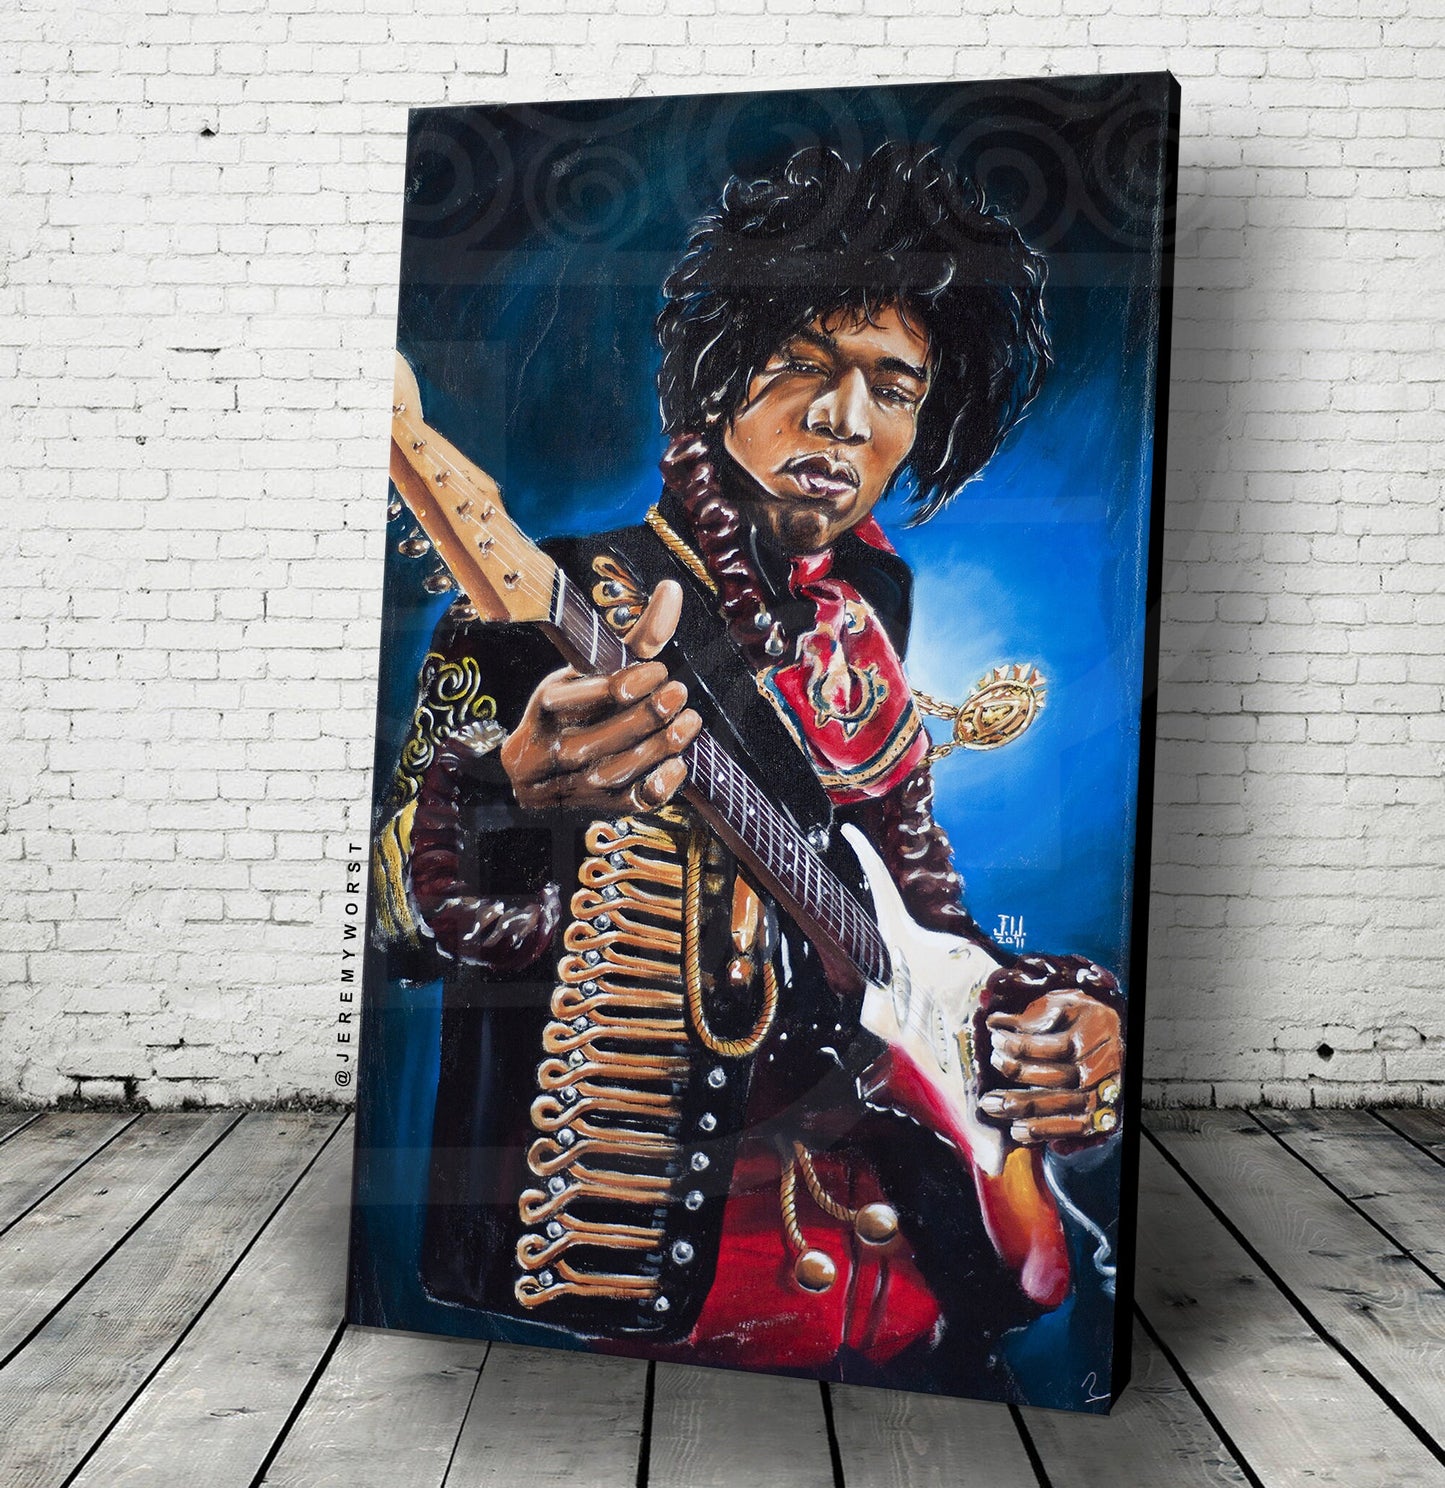 NEW Jimi Hendrix Rocks Original Artwork Signed Print Canvas wall studio room Music legend guitar hero musician fender cosplay jacket